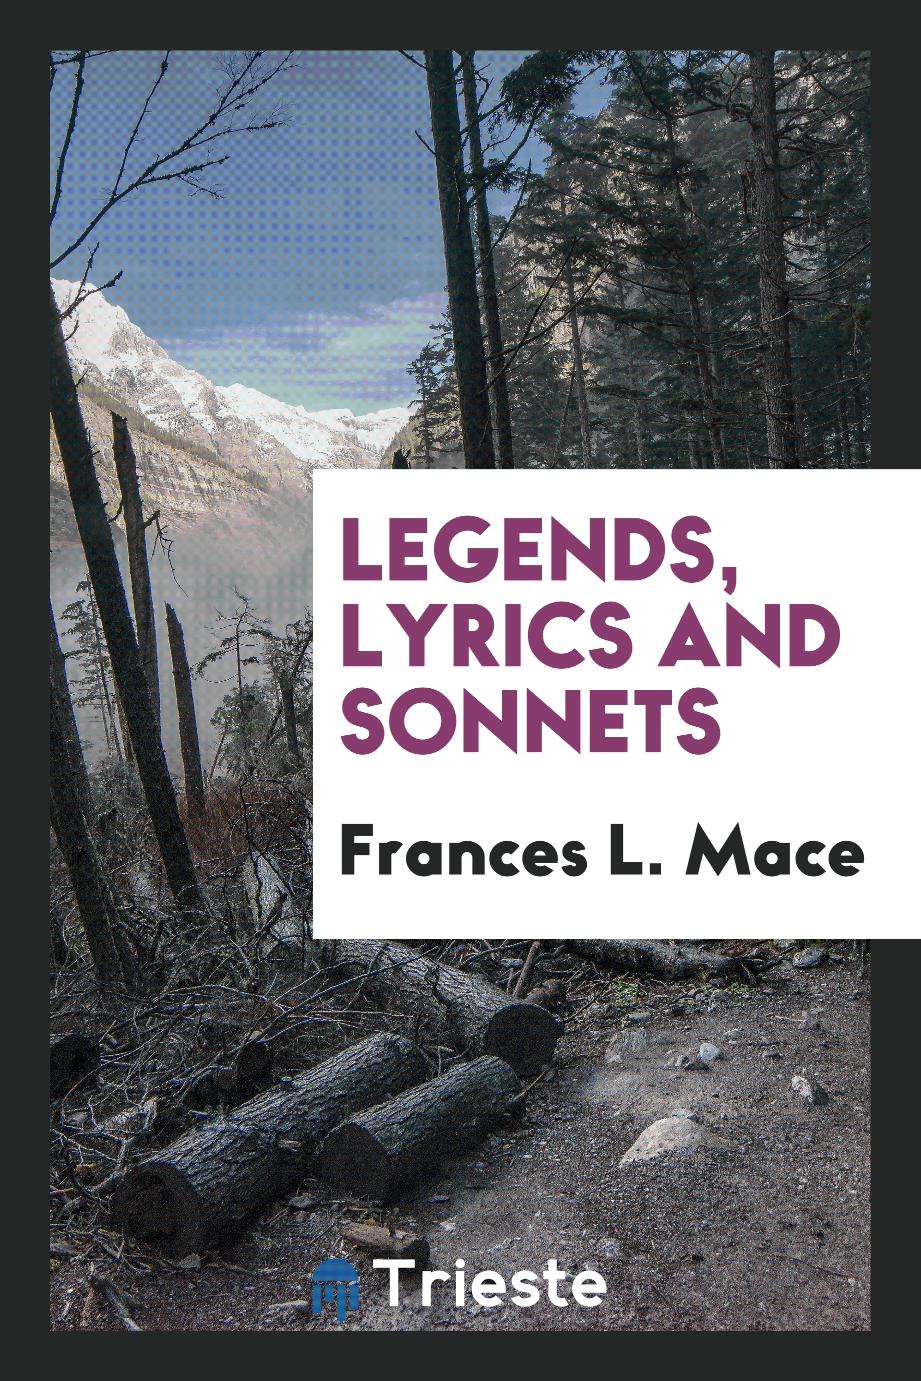 Legends, lyrics and sonnets